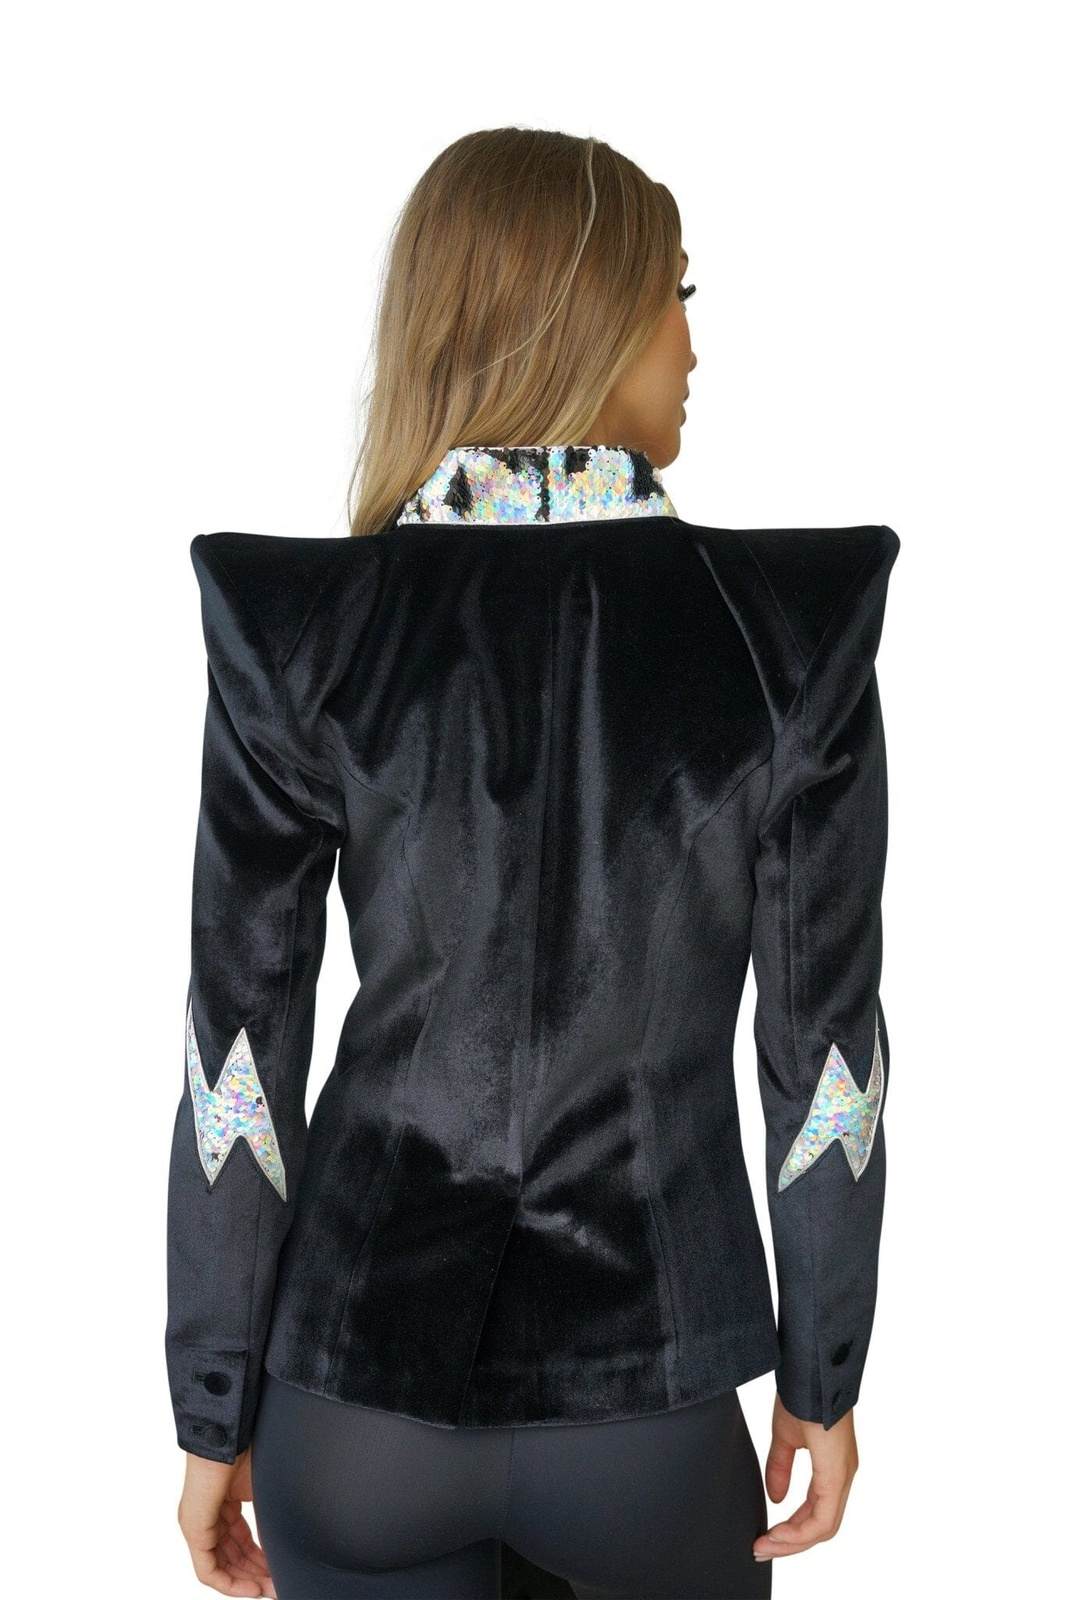 Womens Velvet Blazer with Sequin Lightning Bolts from Love Khaos Futuristic style brand